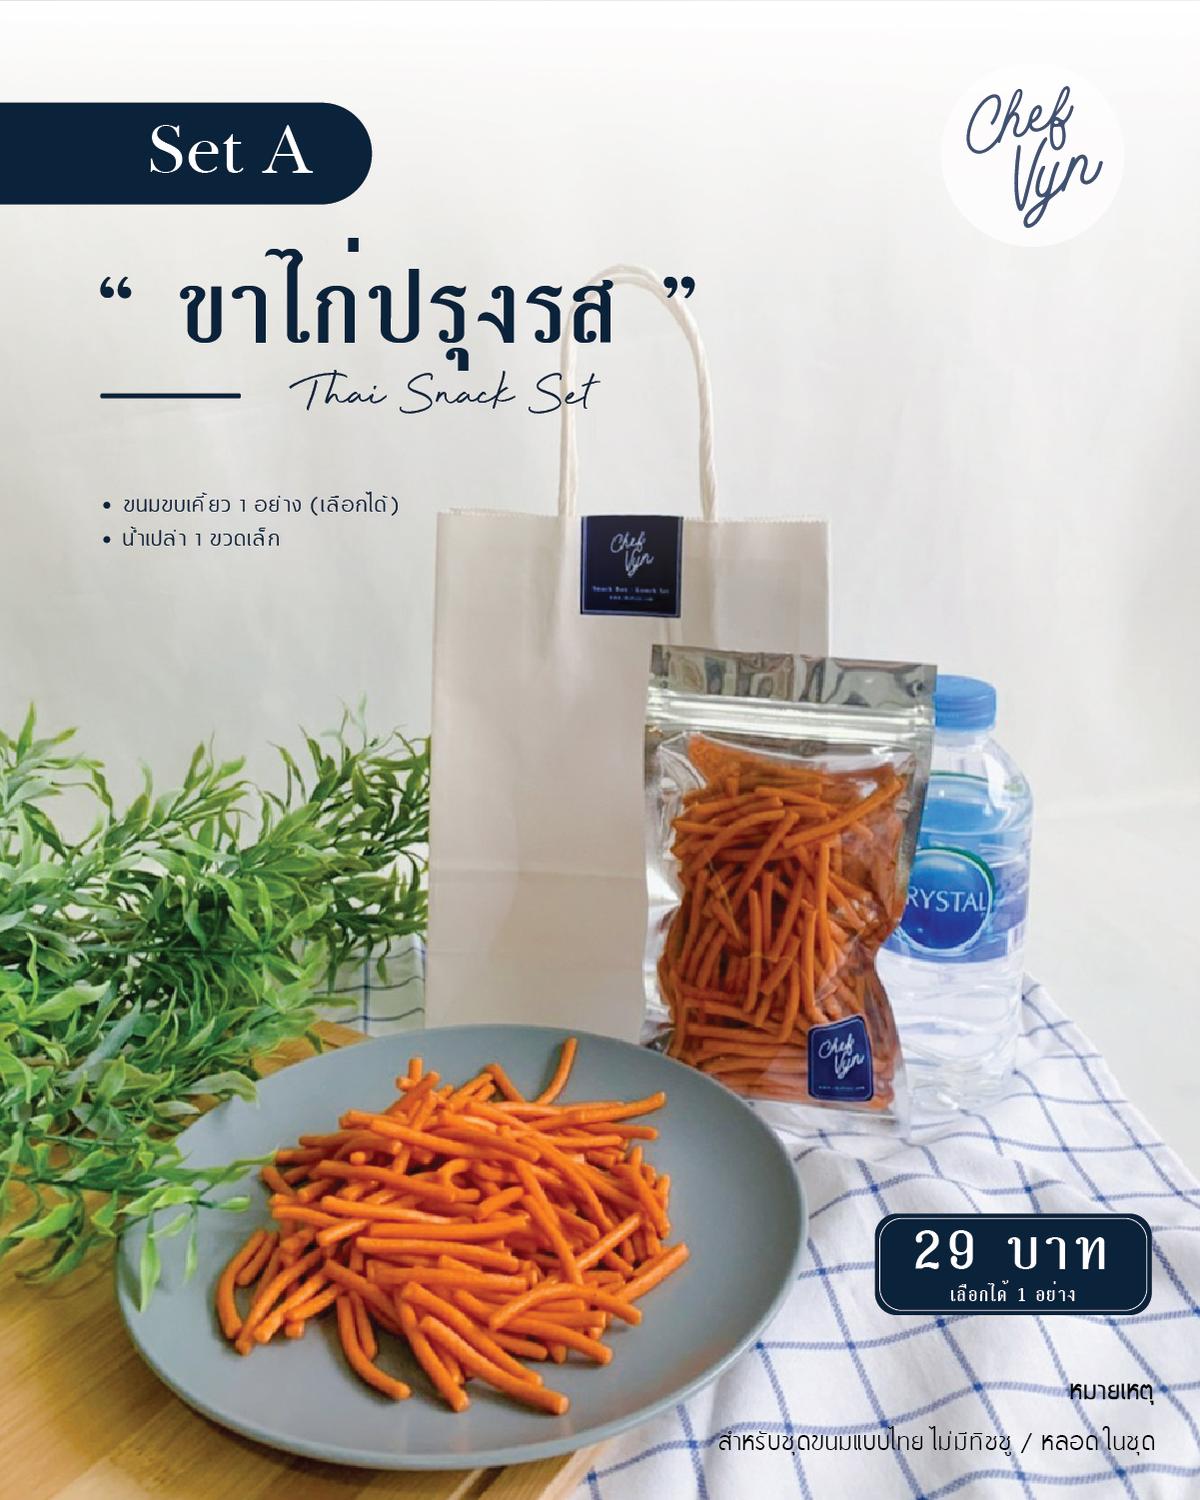 Thai Snack ขนม 1 อย่างพร้อมน้ำและถุง SetA 04